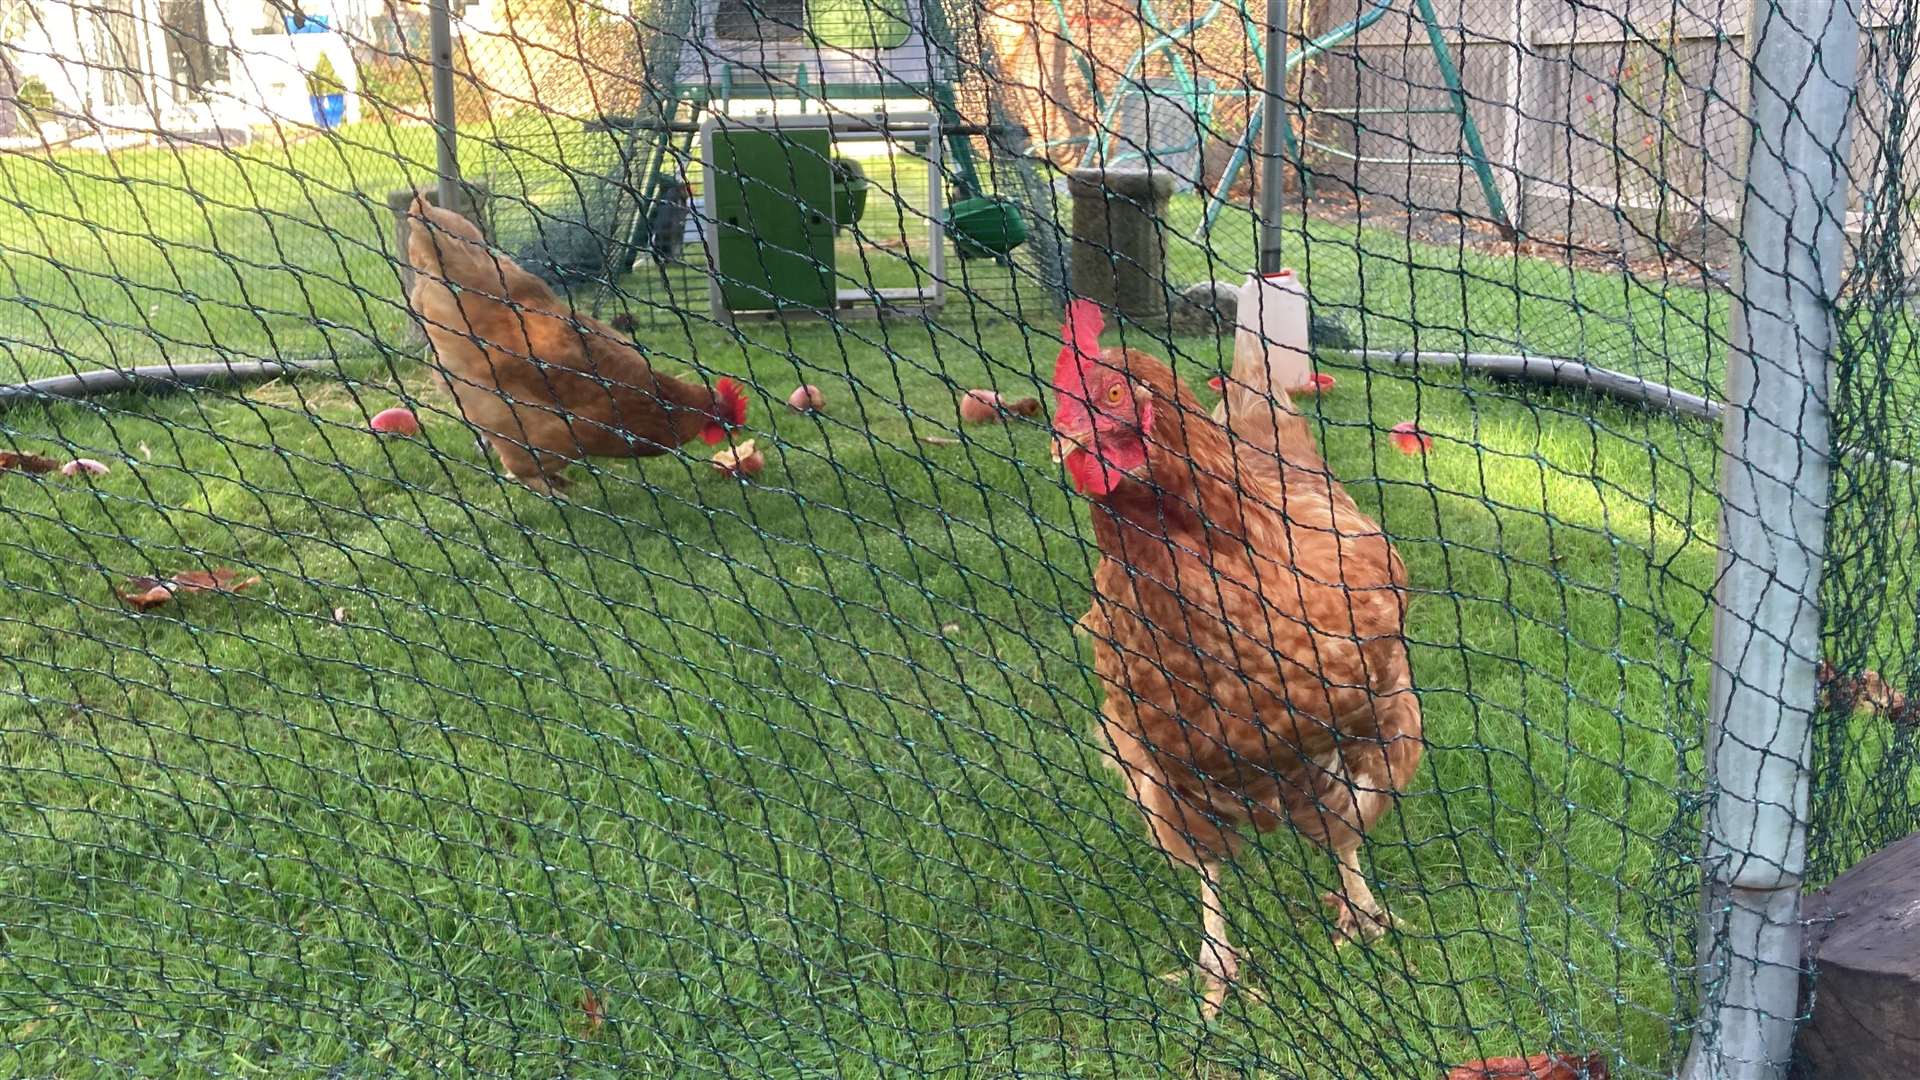 Chickens not enjoying Defra's 'flockdown' to counter bird flu. Picture: John Nurden